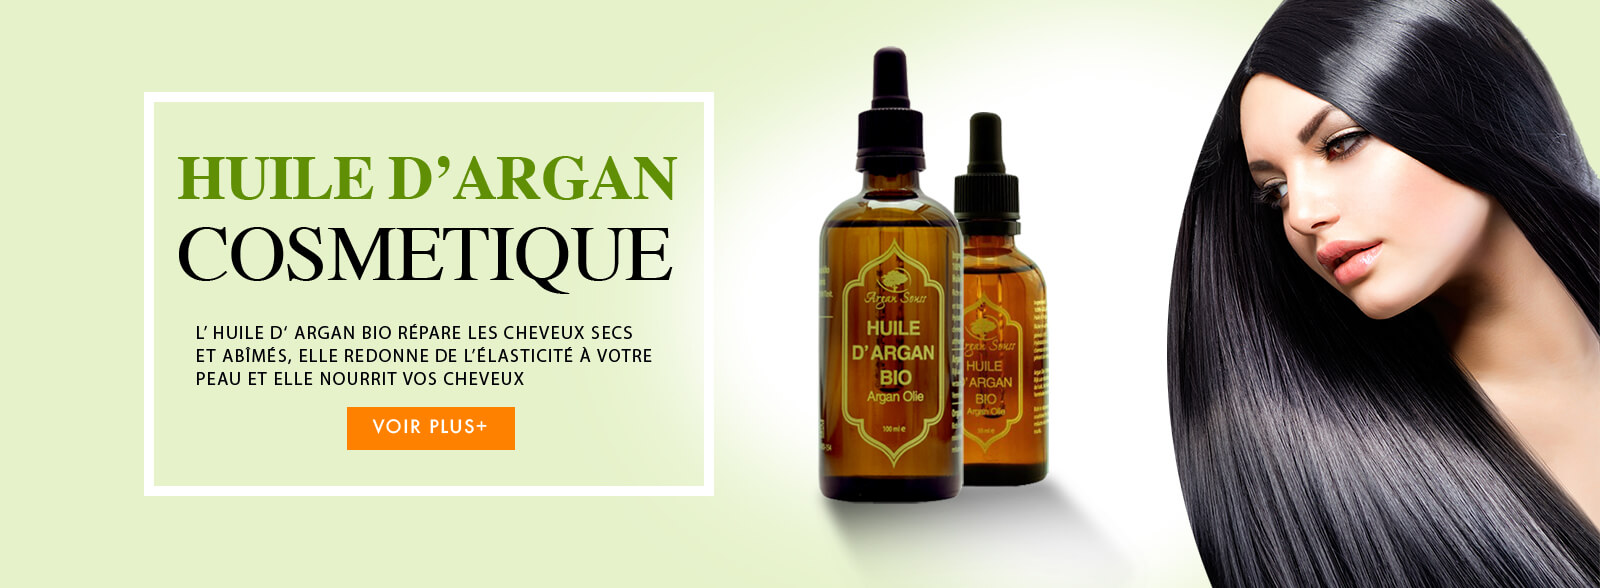 Huile d'argan cosmétique 100 ml - Bio Argan